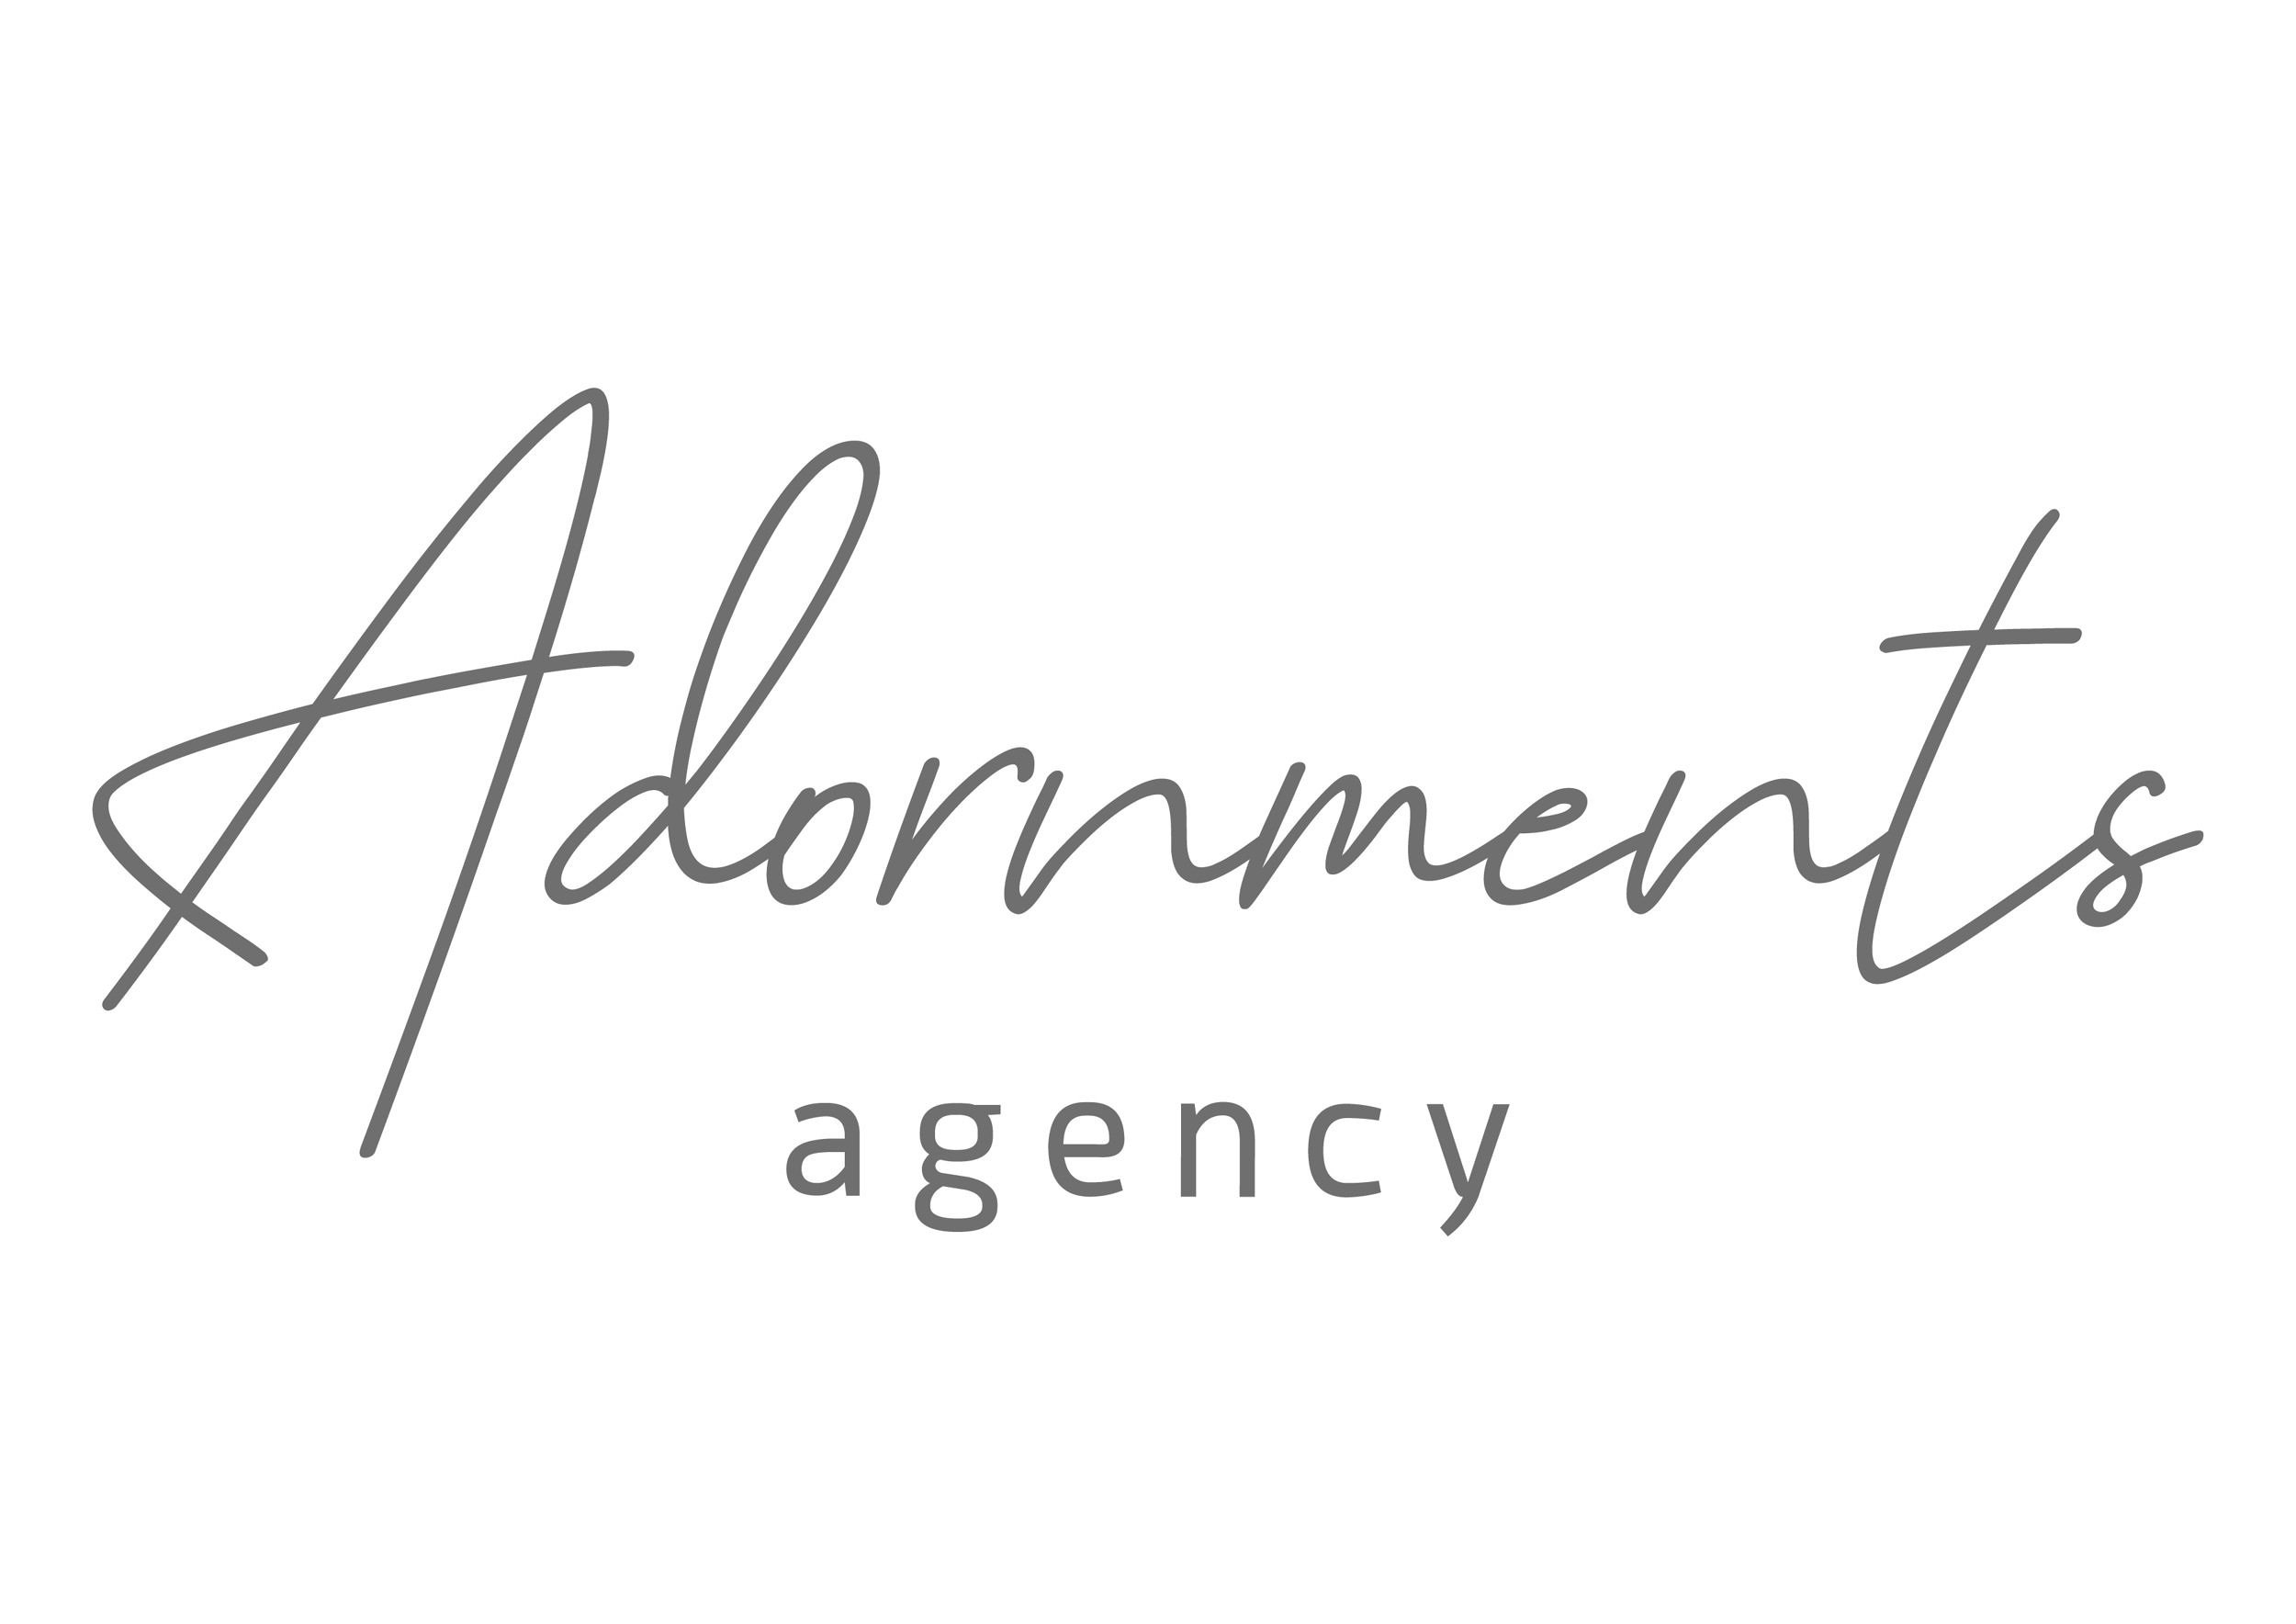 adornments agency